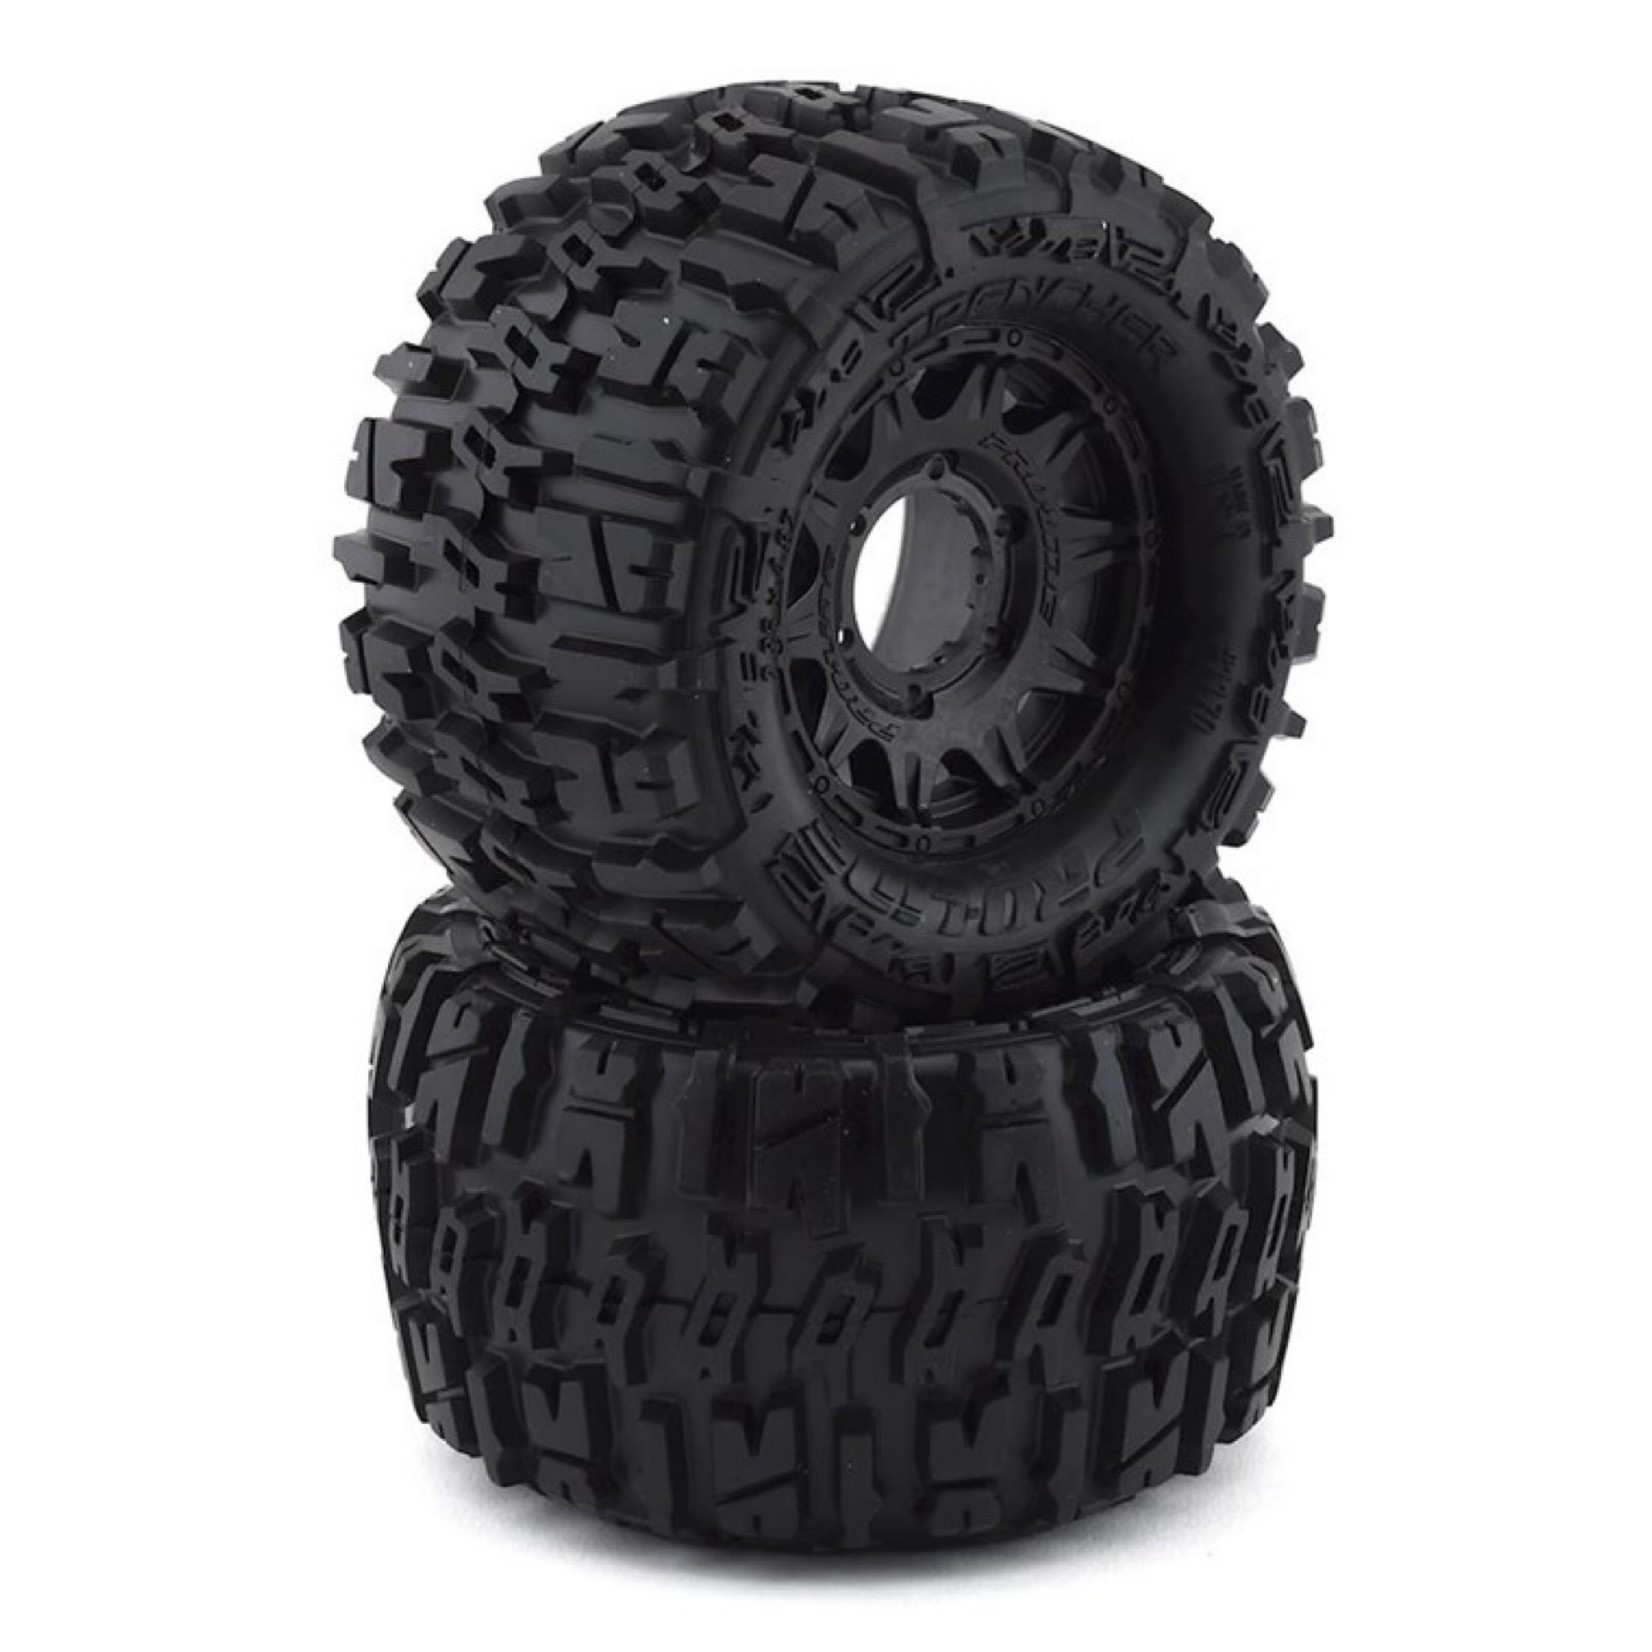 Pro-Line Pro-Line Trencher 2.8" Tires w/Raid 6x30 Wheels (2) (M2) (Black) w/Removable Hex #1170-10